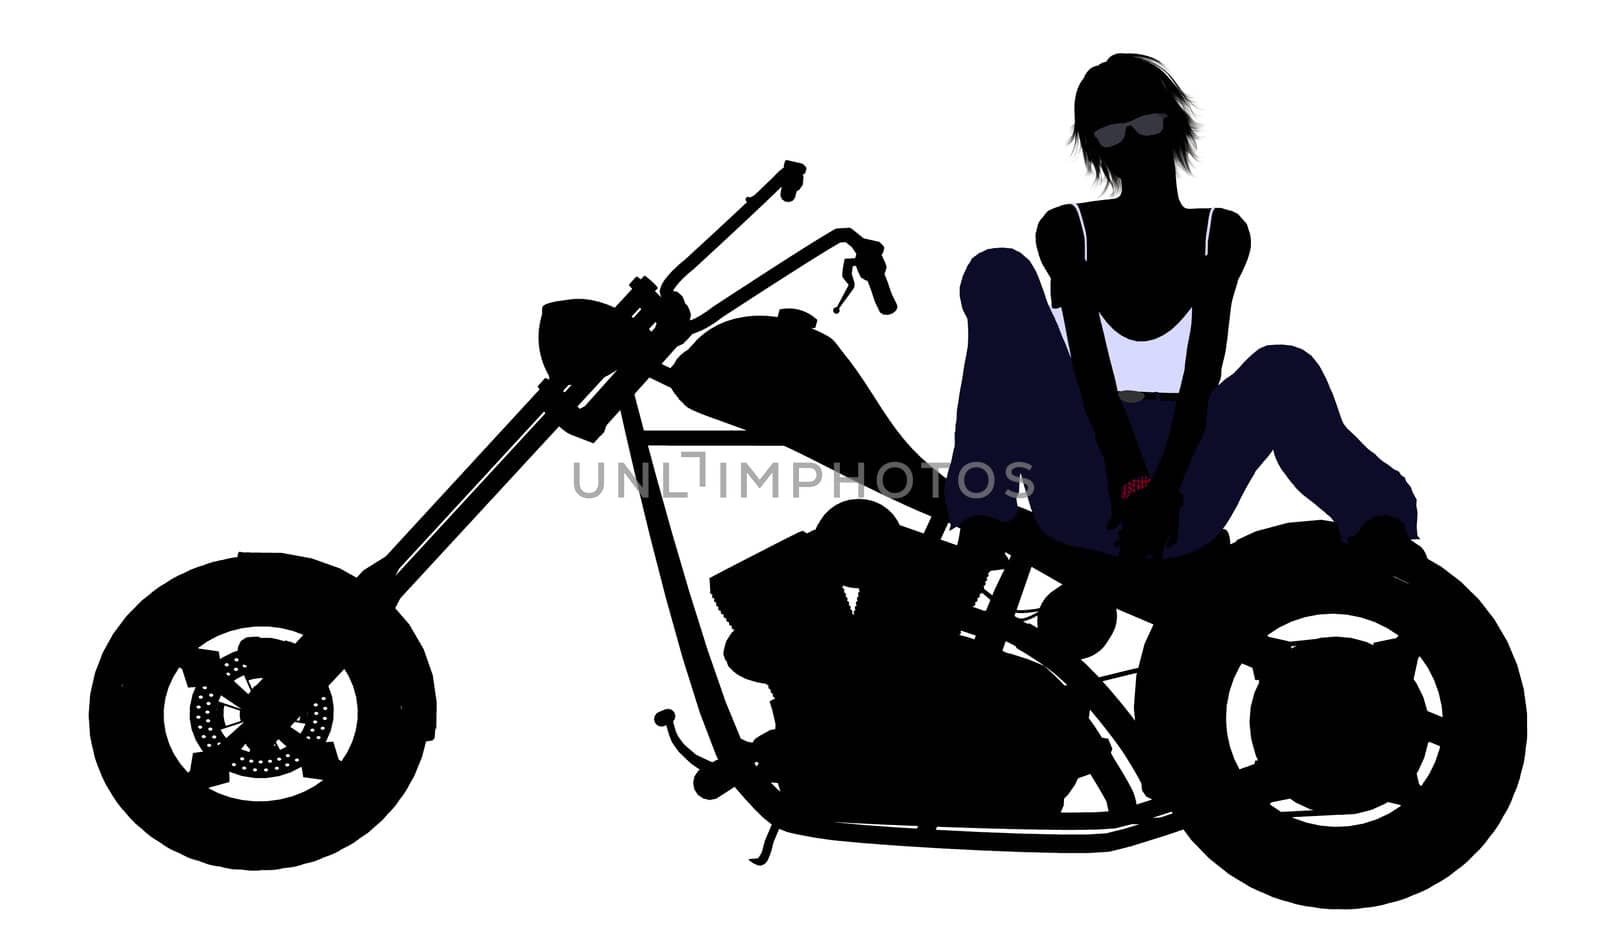 A female biker silhouette on a white background